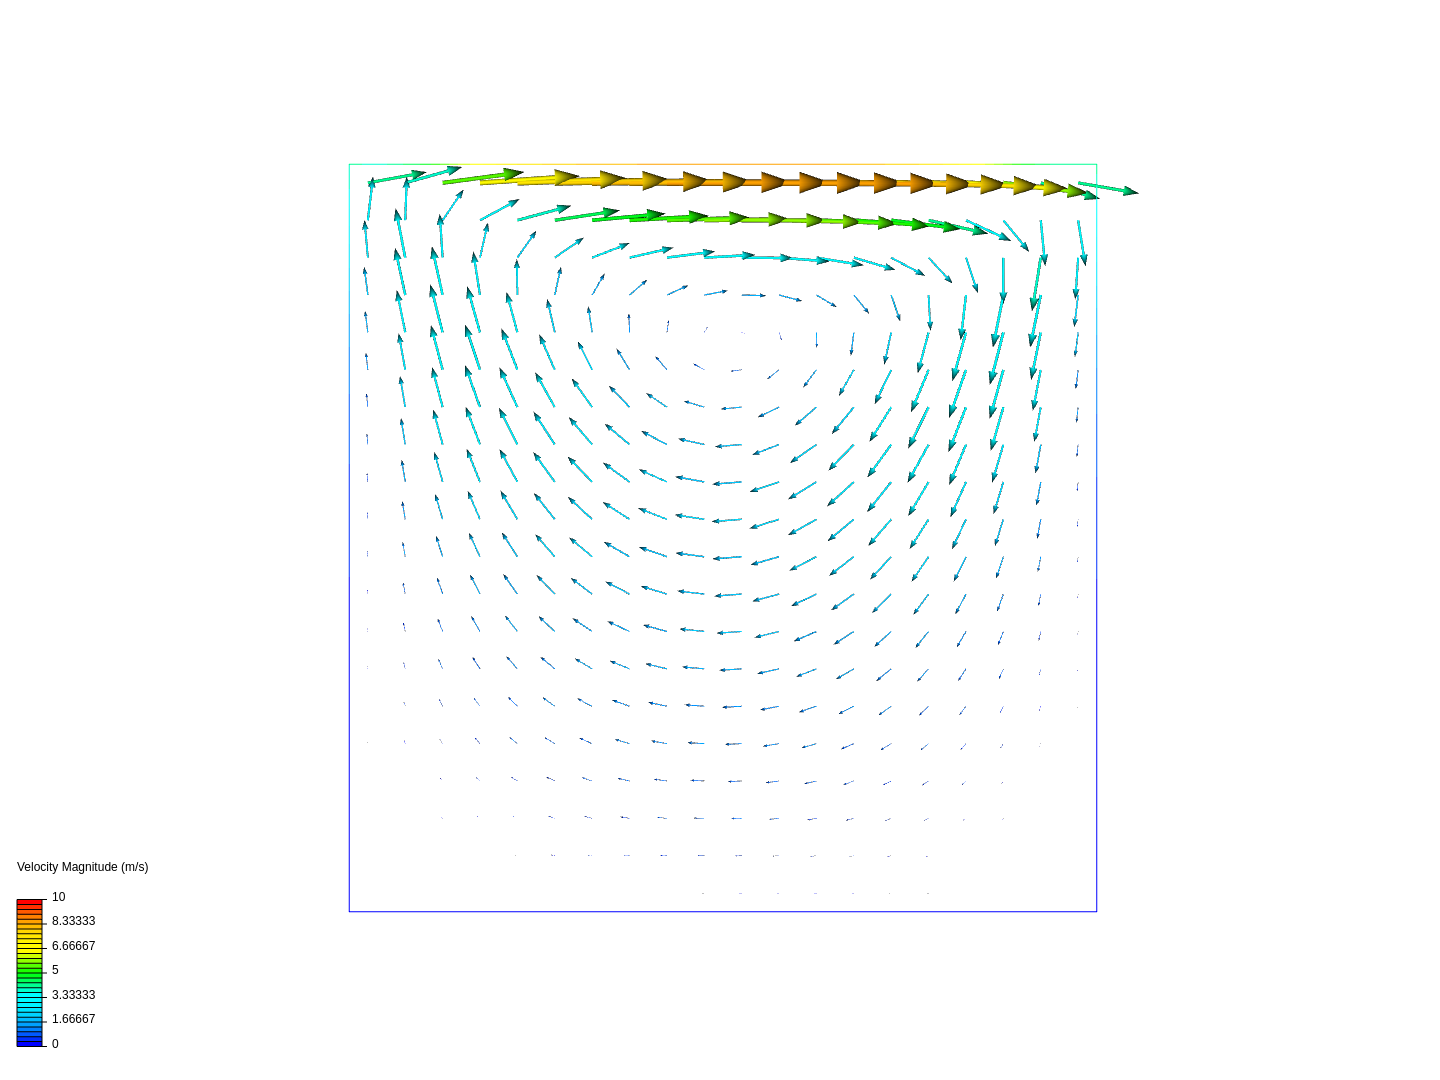 Lid-driven cavity image